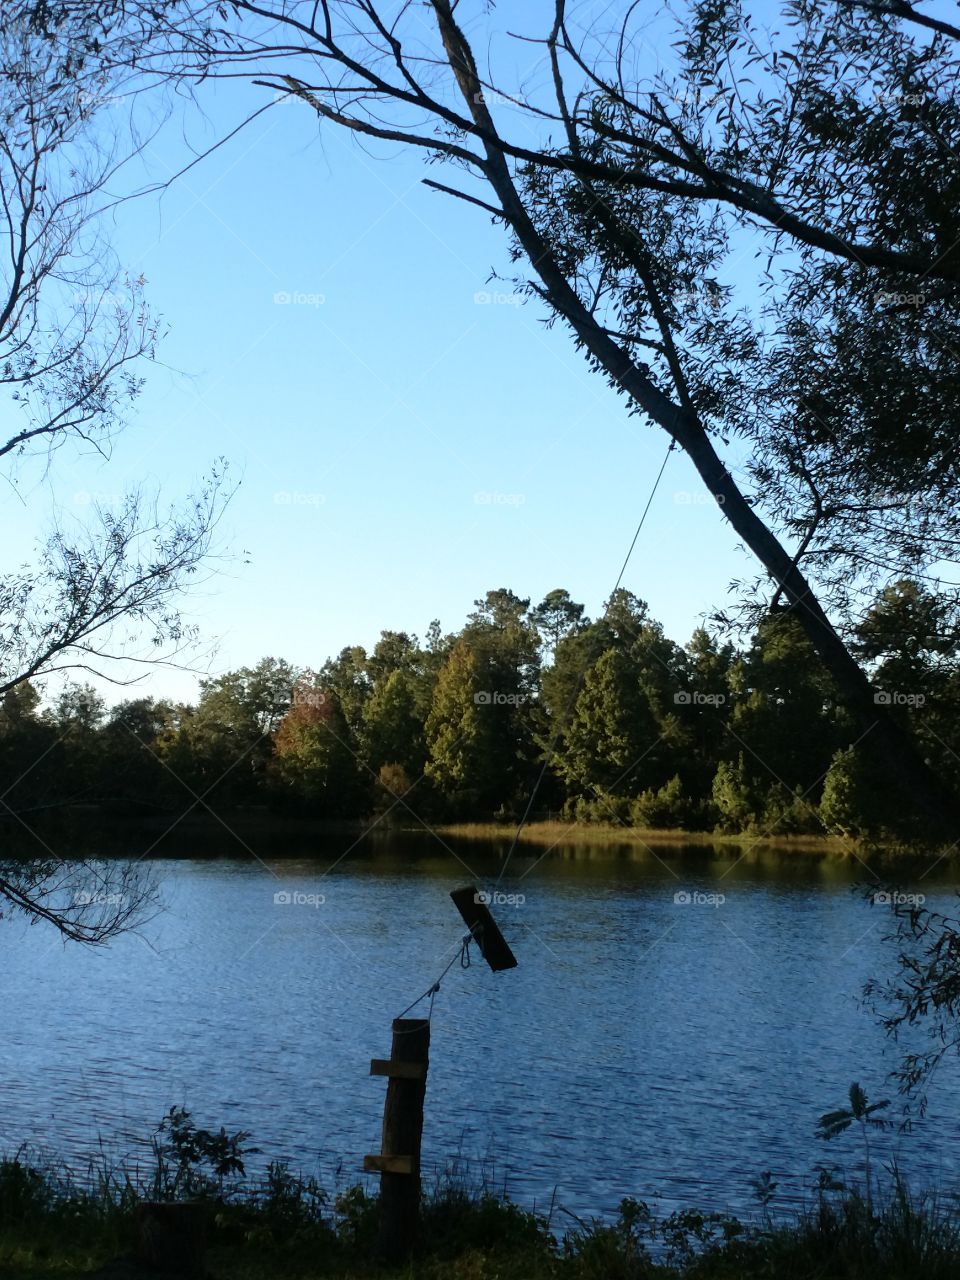 rope swing, lake, blue water, fun, sky, tree